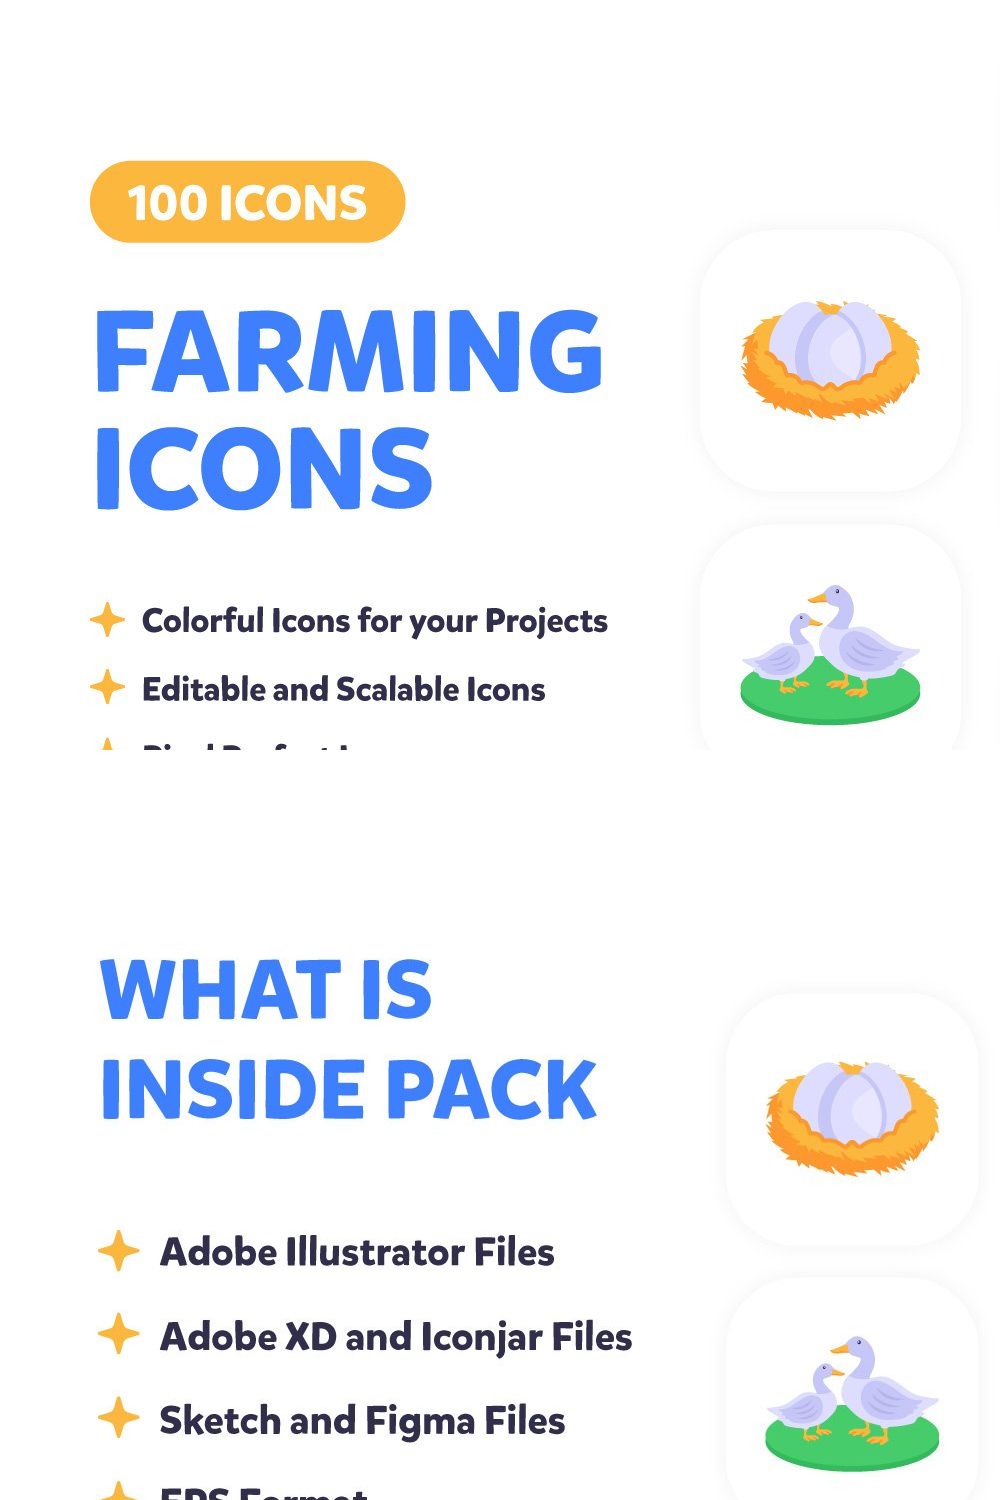 100 Farming Icons - Flat Vectors pinterest preview image.